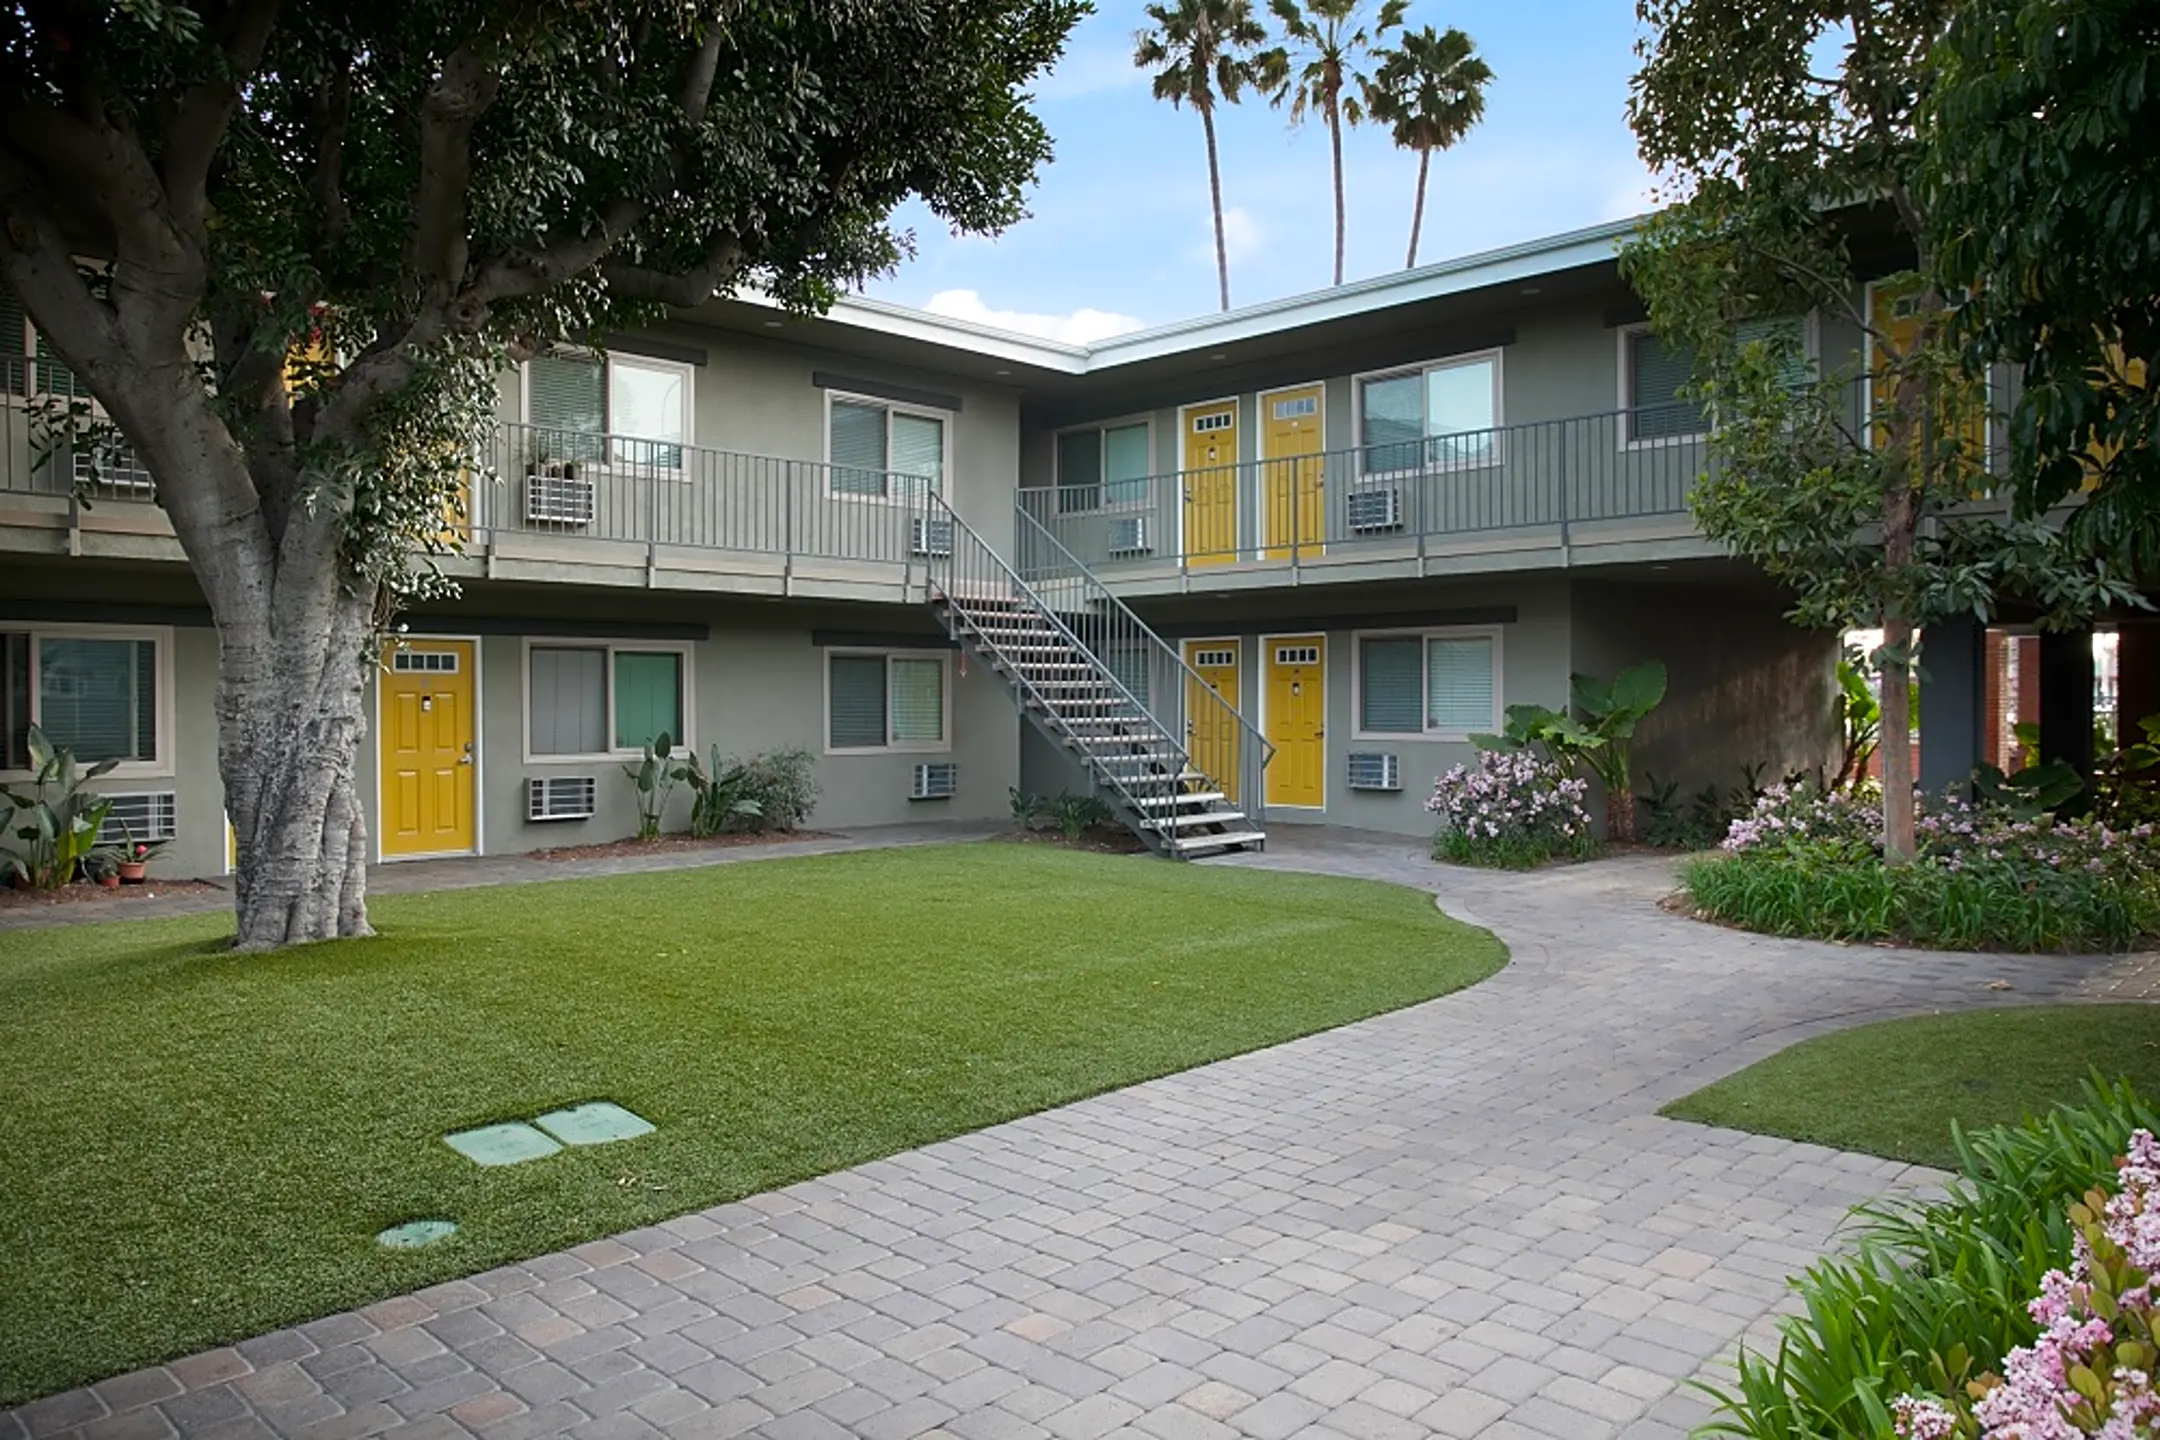 Building - California Palms Apartments - Santa Ana, CA